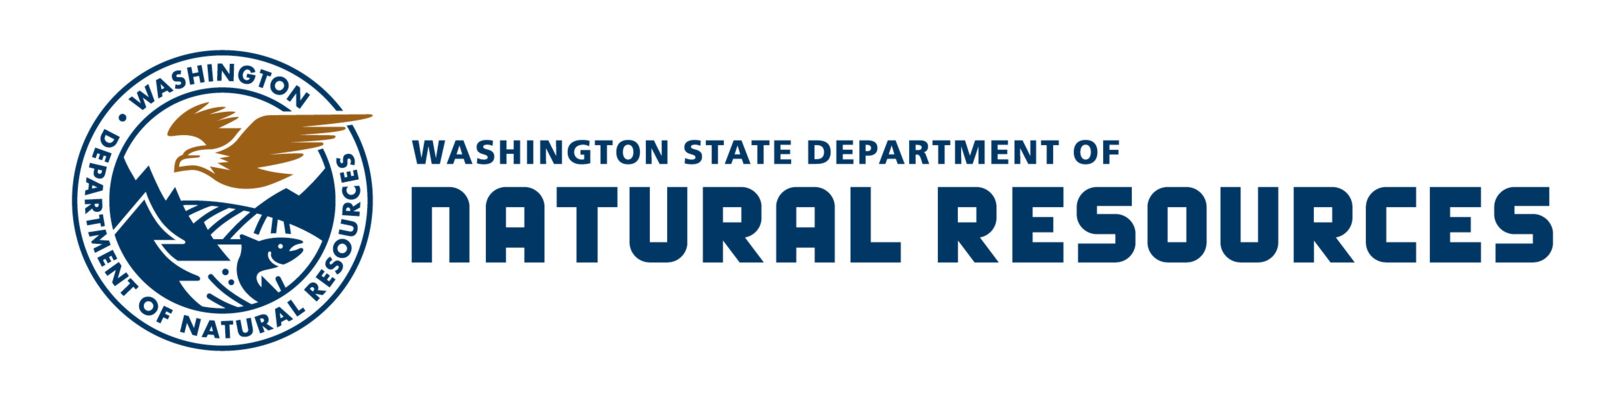 Washington Dept. of Natural Resources Seeks Urban Forest Inventory Specialist